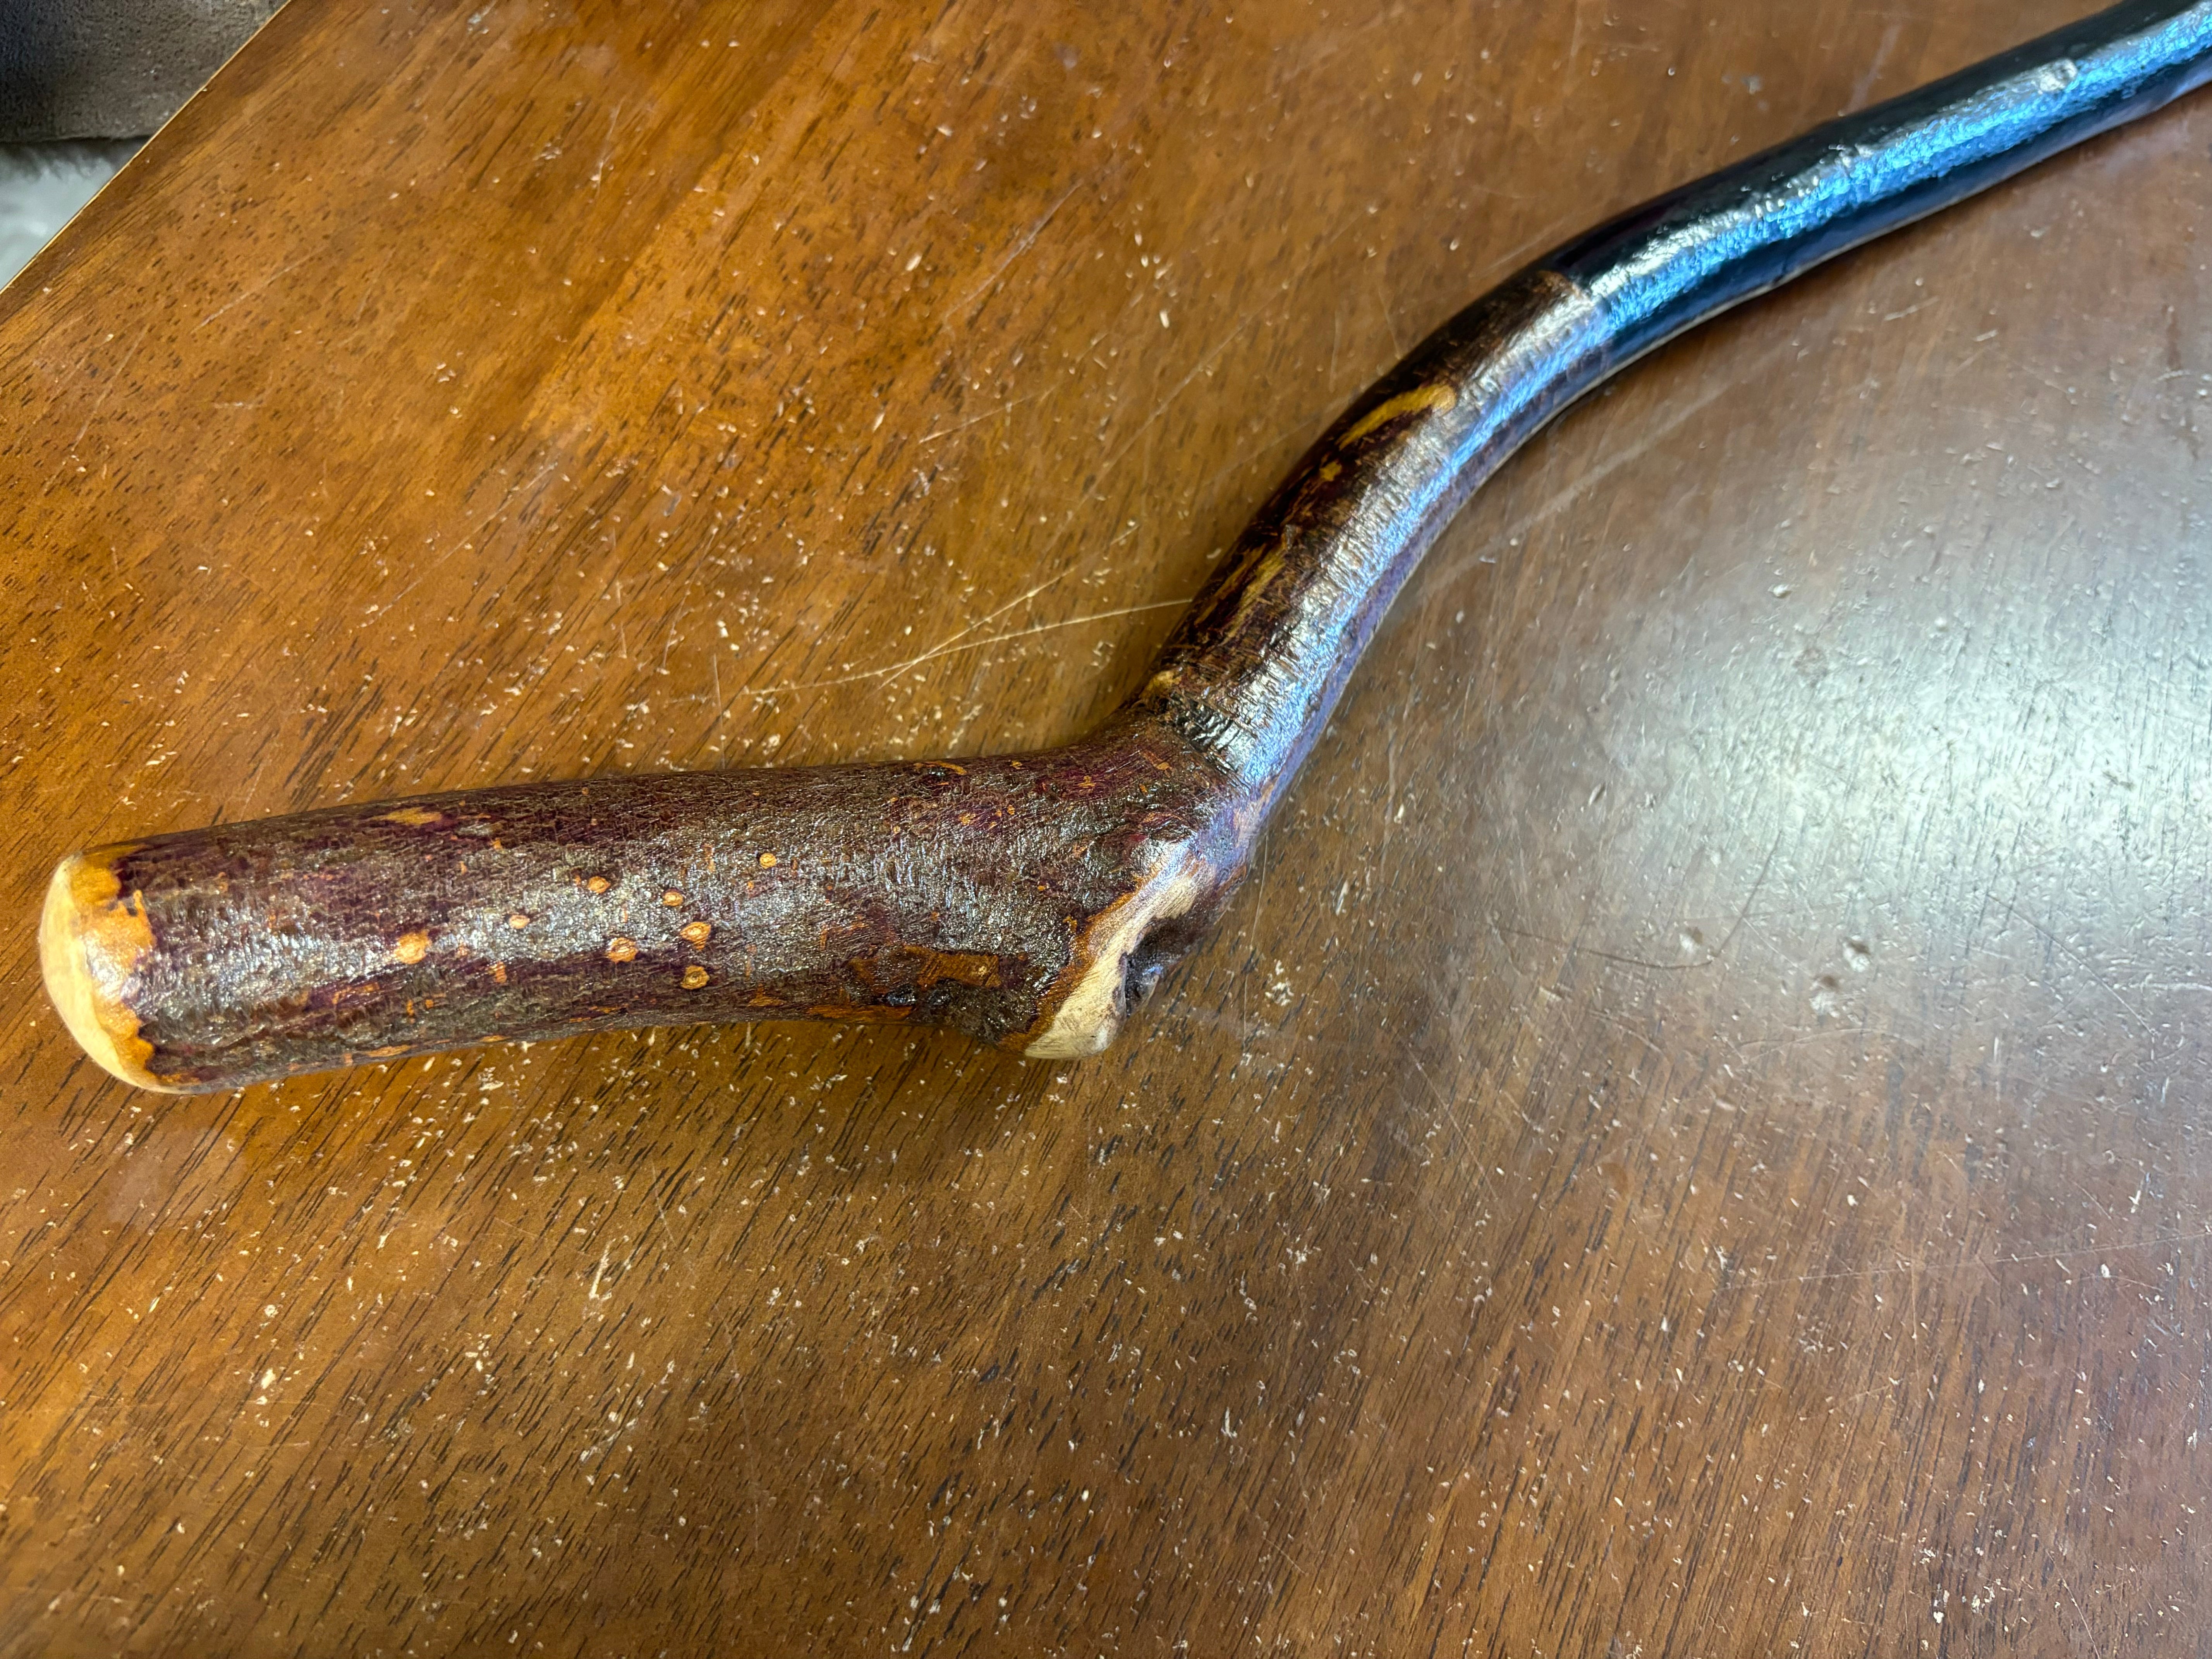 Blackthorn Hiking Stick - 54 1/2 inch - Handmade in Ireland